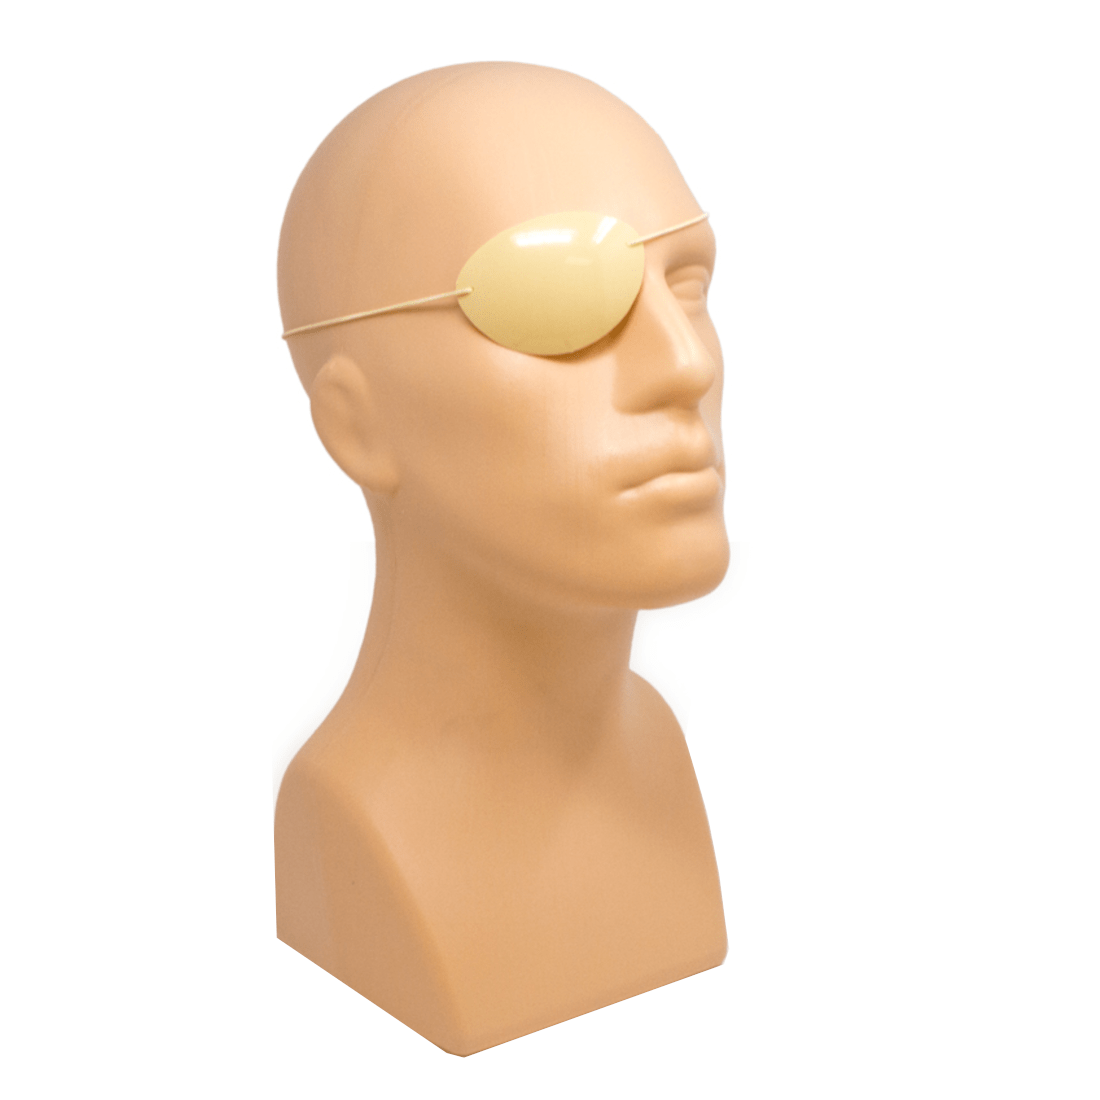 Eye shield with elastic strap